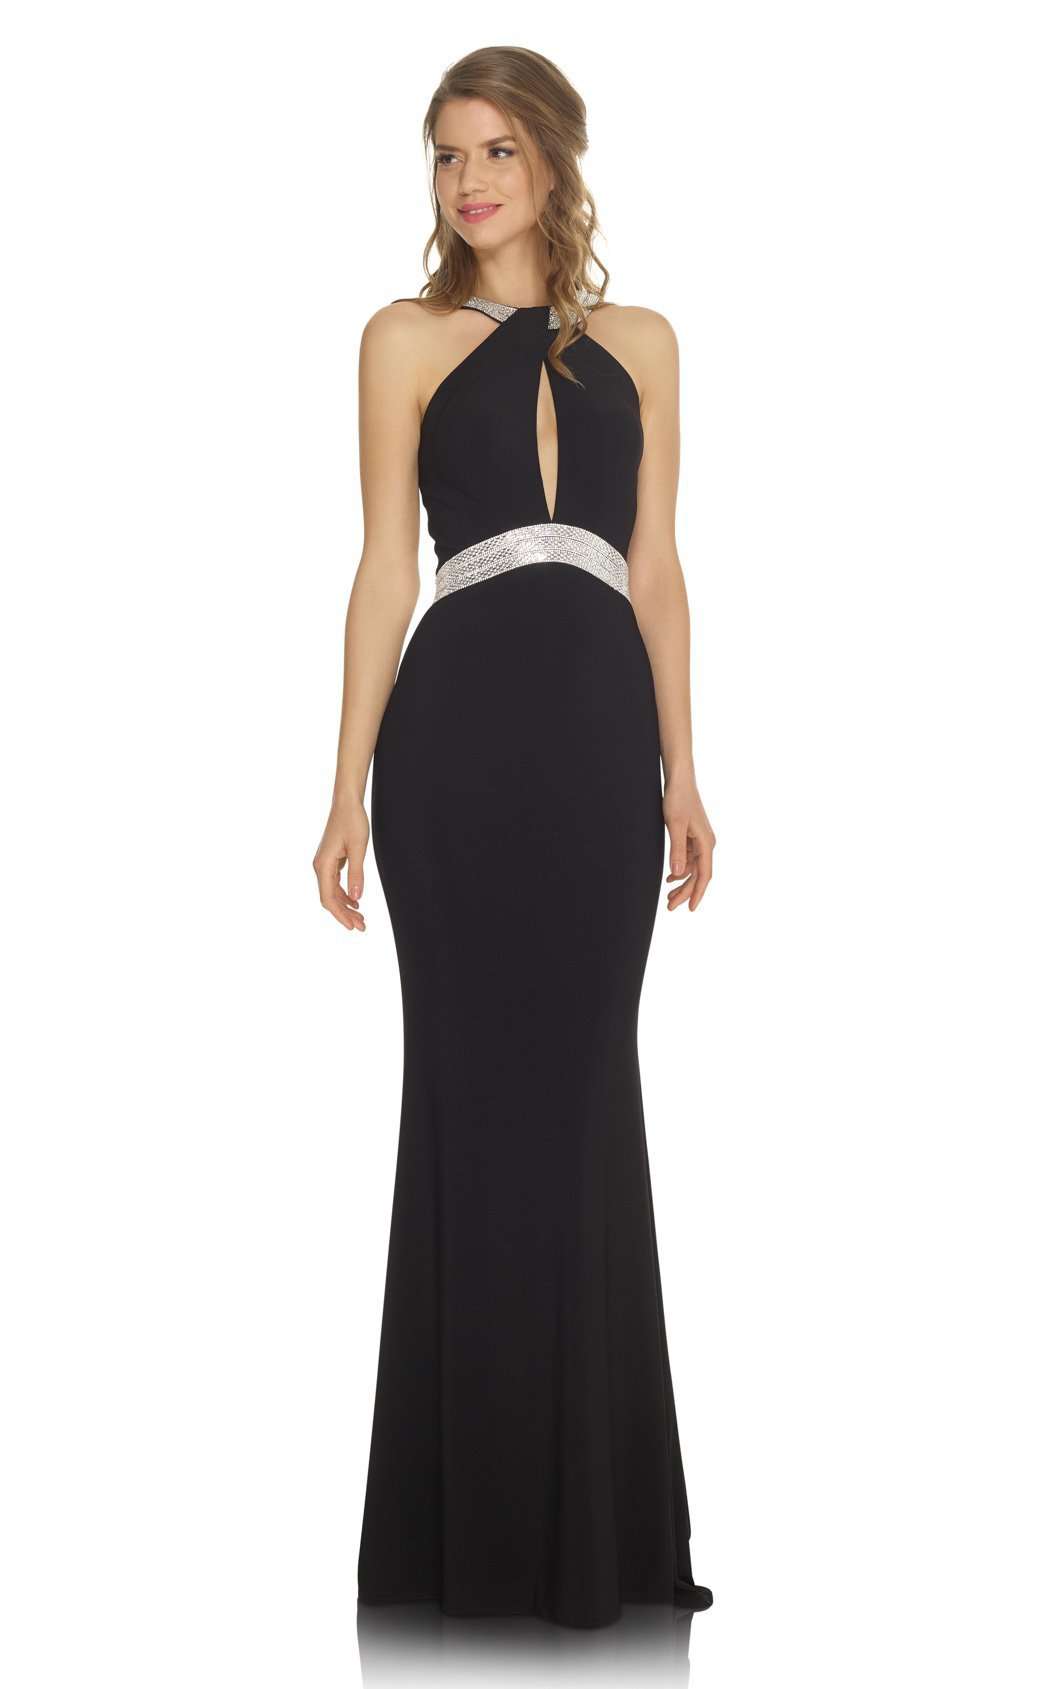 Jora Collection S80003 Dress | Buy Designer Gowns & Evening Dresses ...